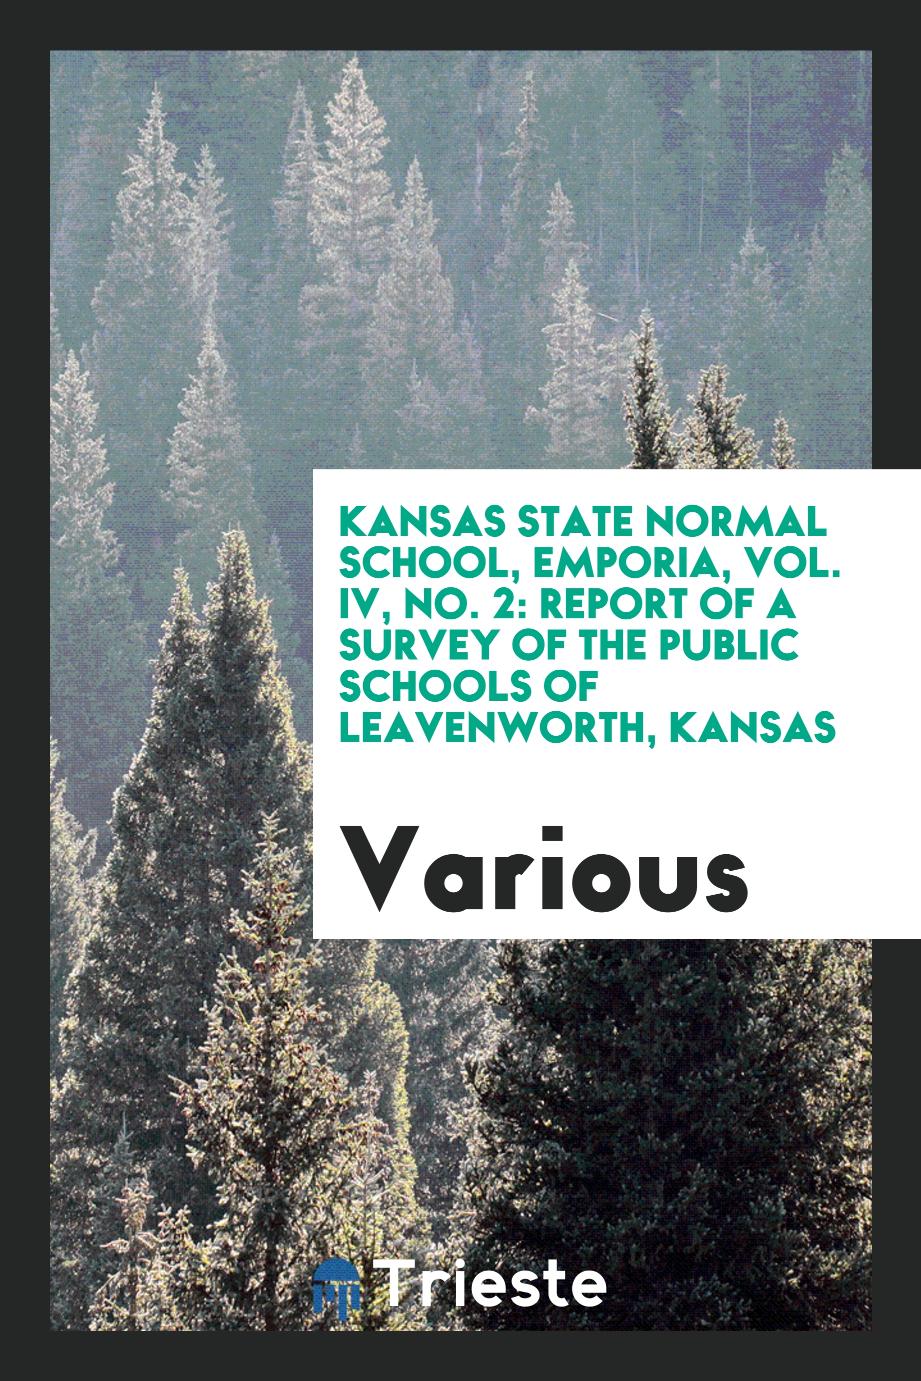 kansas state normal school, emporia, Vol. IV, No. 2: Report of a survey of the public schools of Leavenworth, Kansas